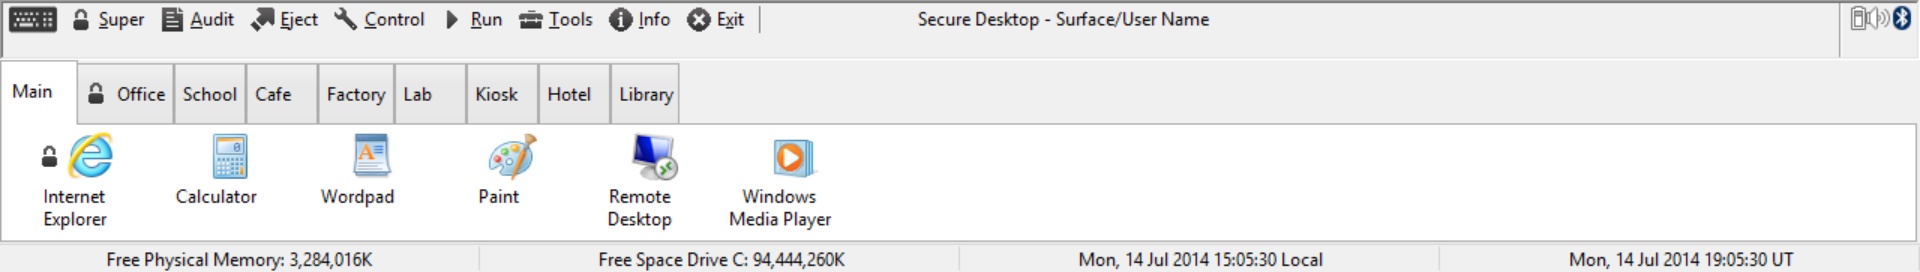 Secure Desktop 8